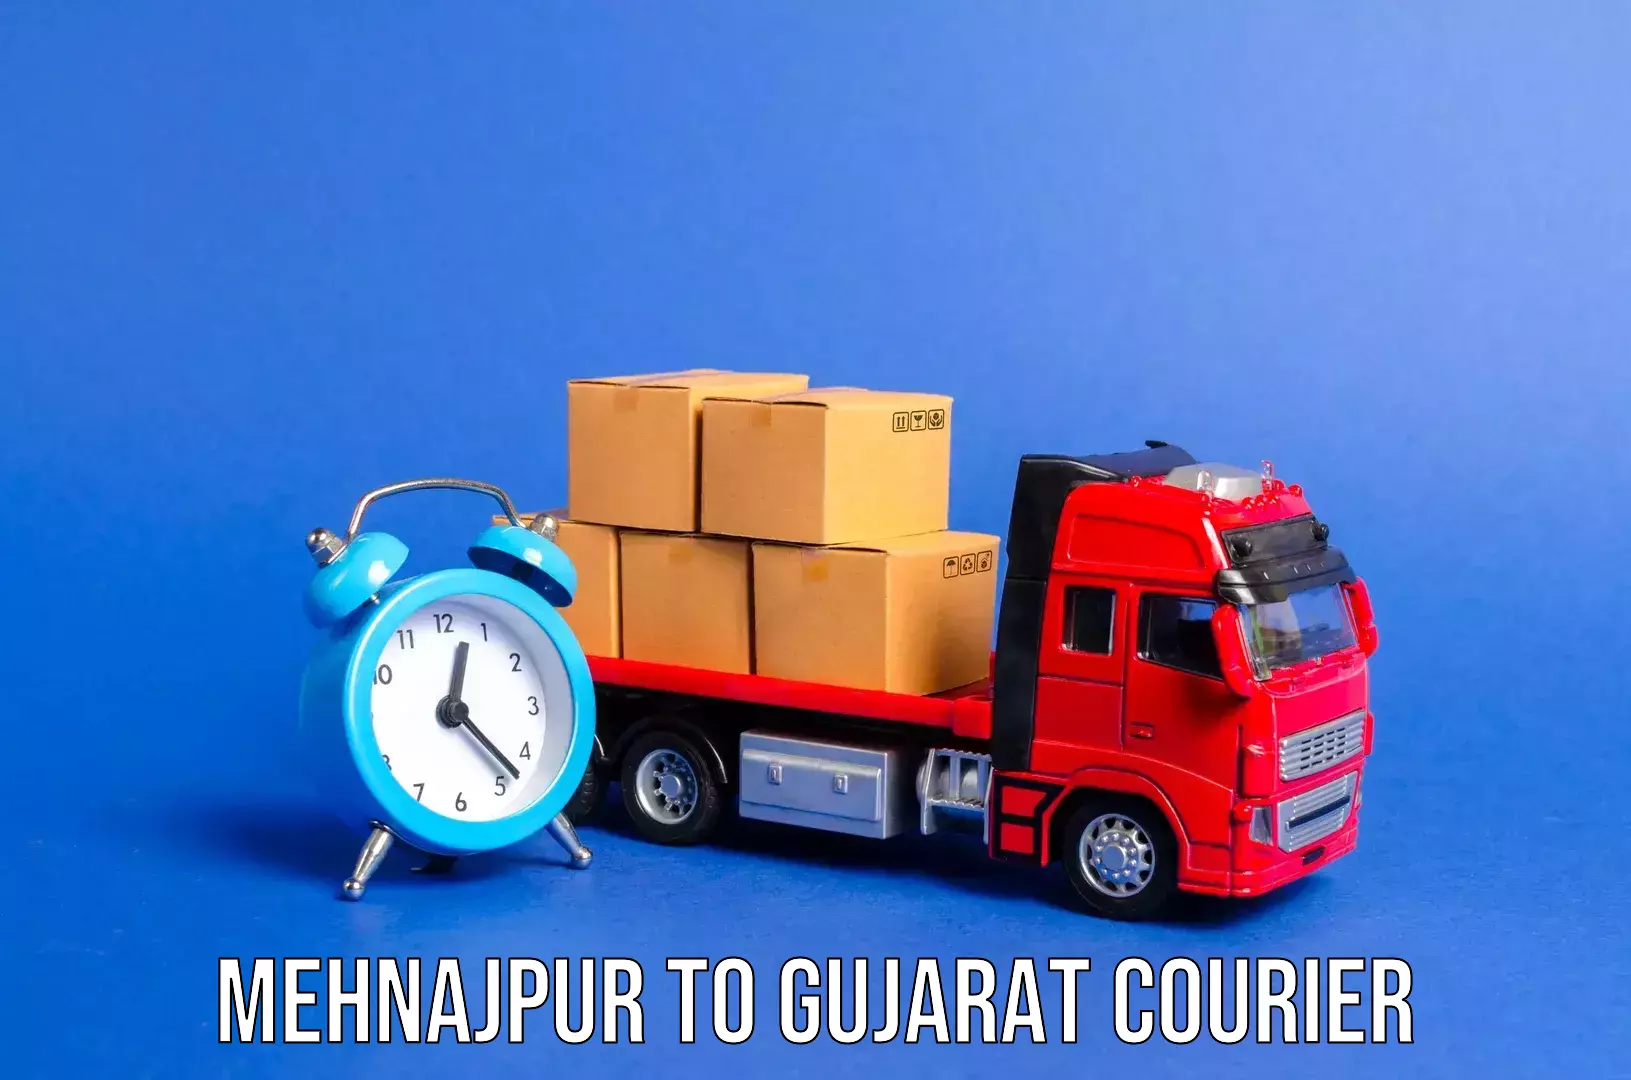 Luggage shipment specialists Mehnajpur to Gujarat